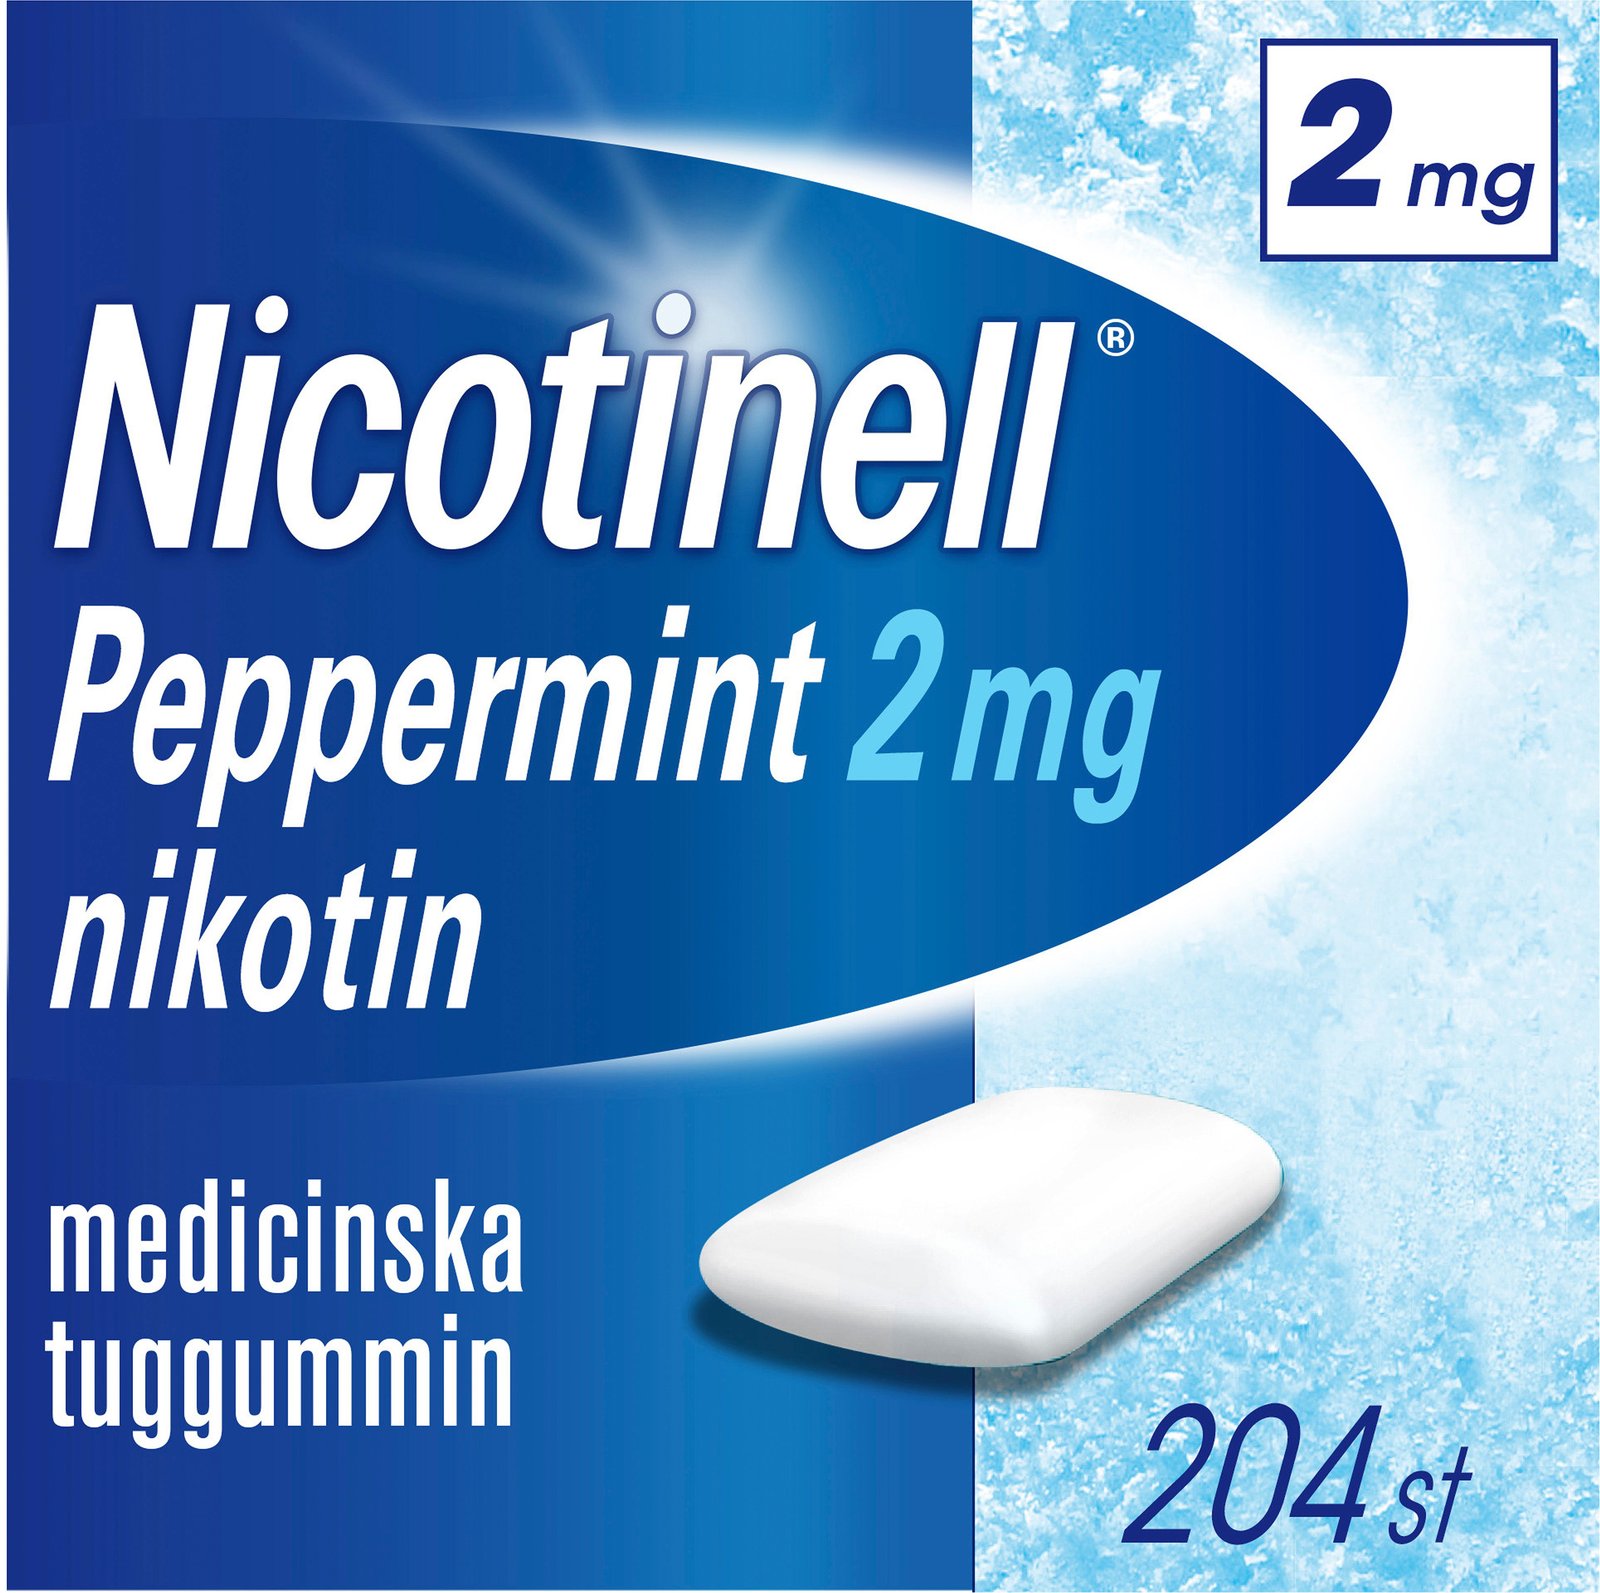 Nicotinell Peppermint 2 mg Nikotin Medicinska tuggummin 204 st